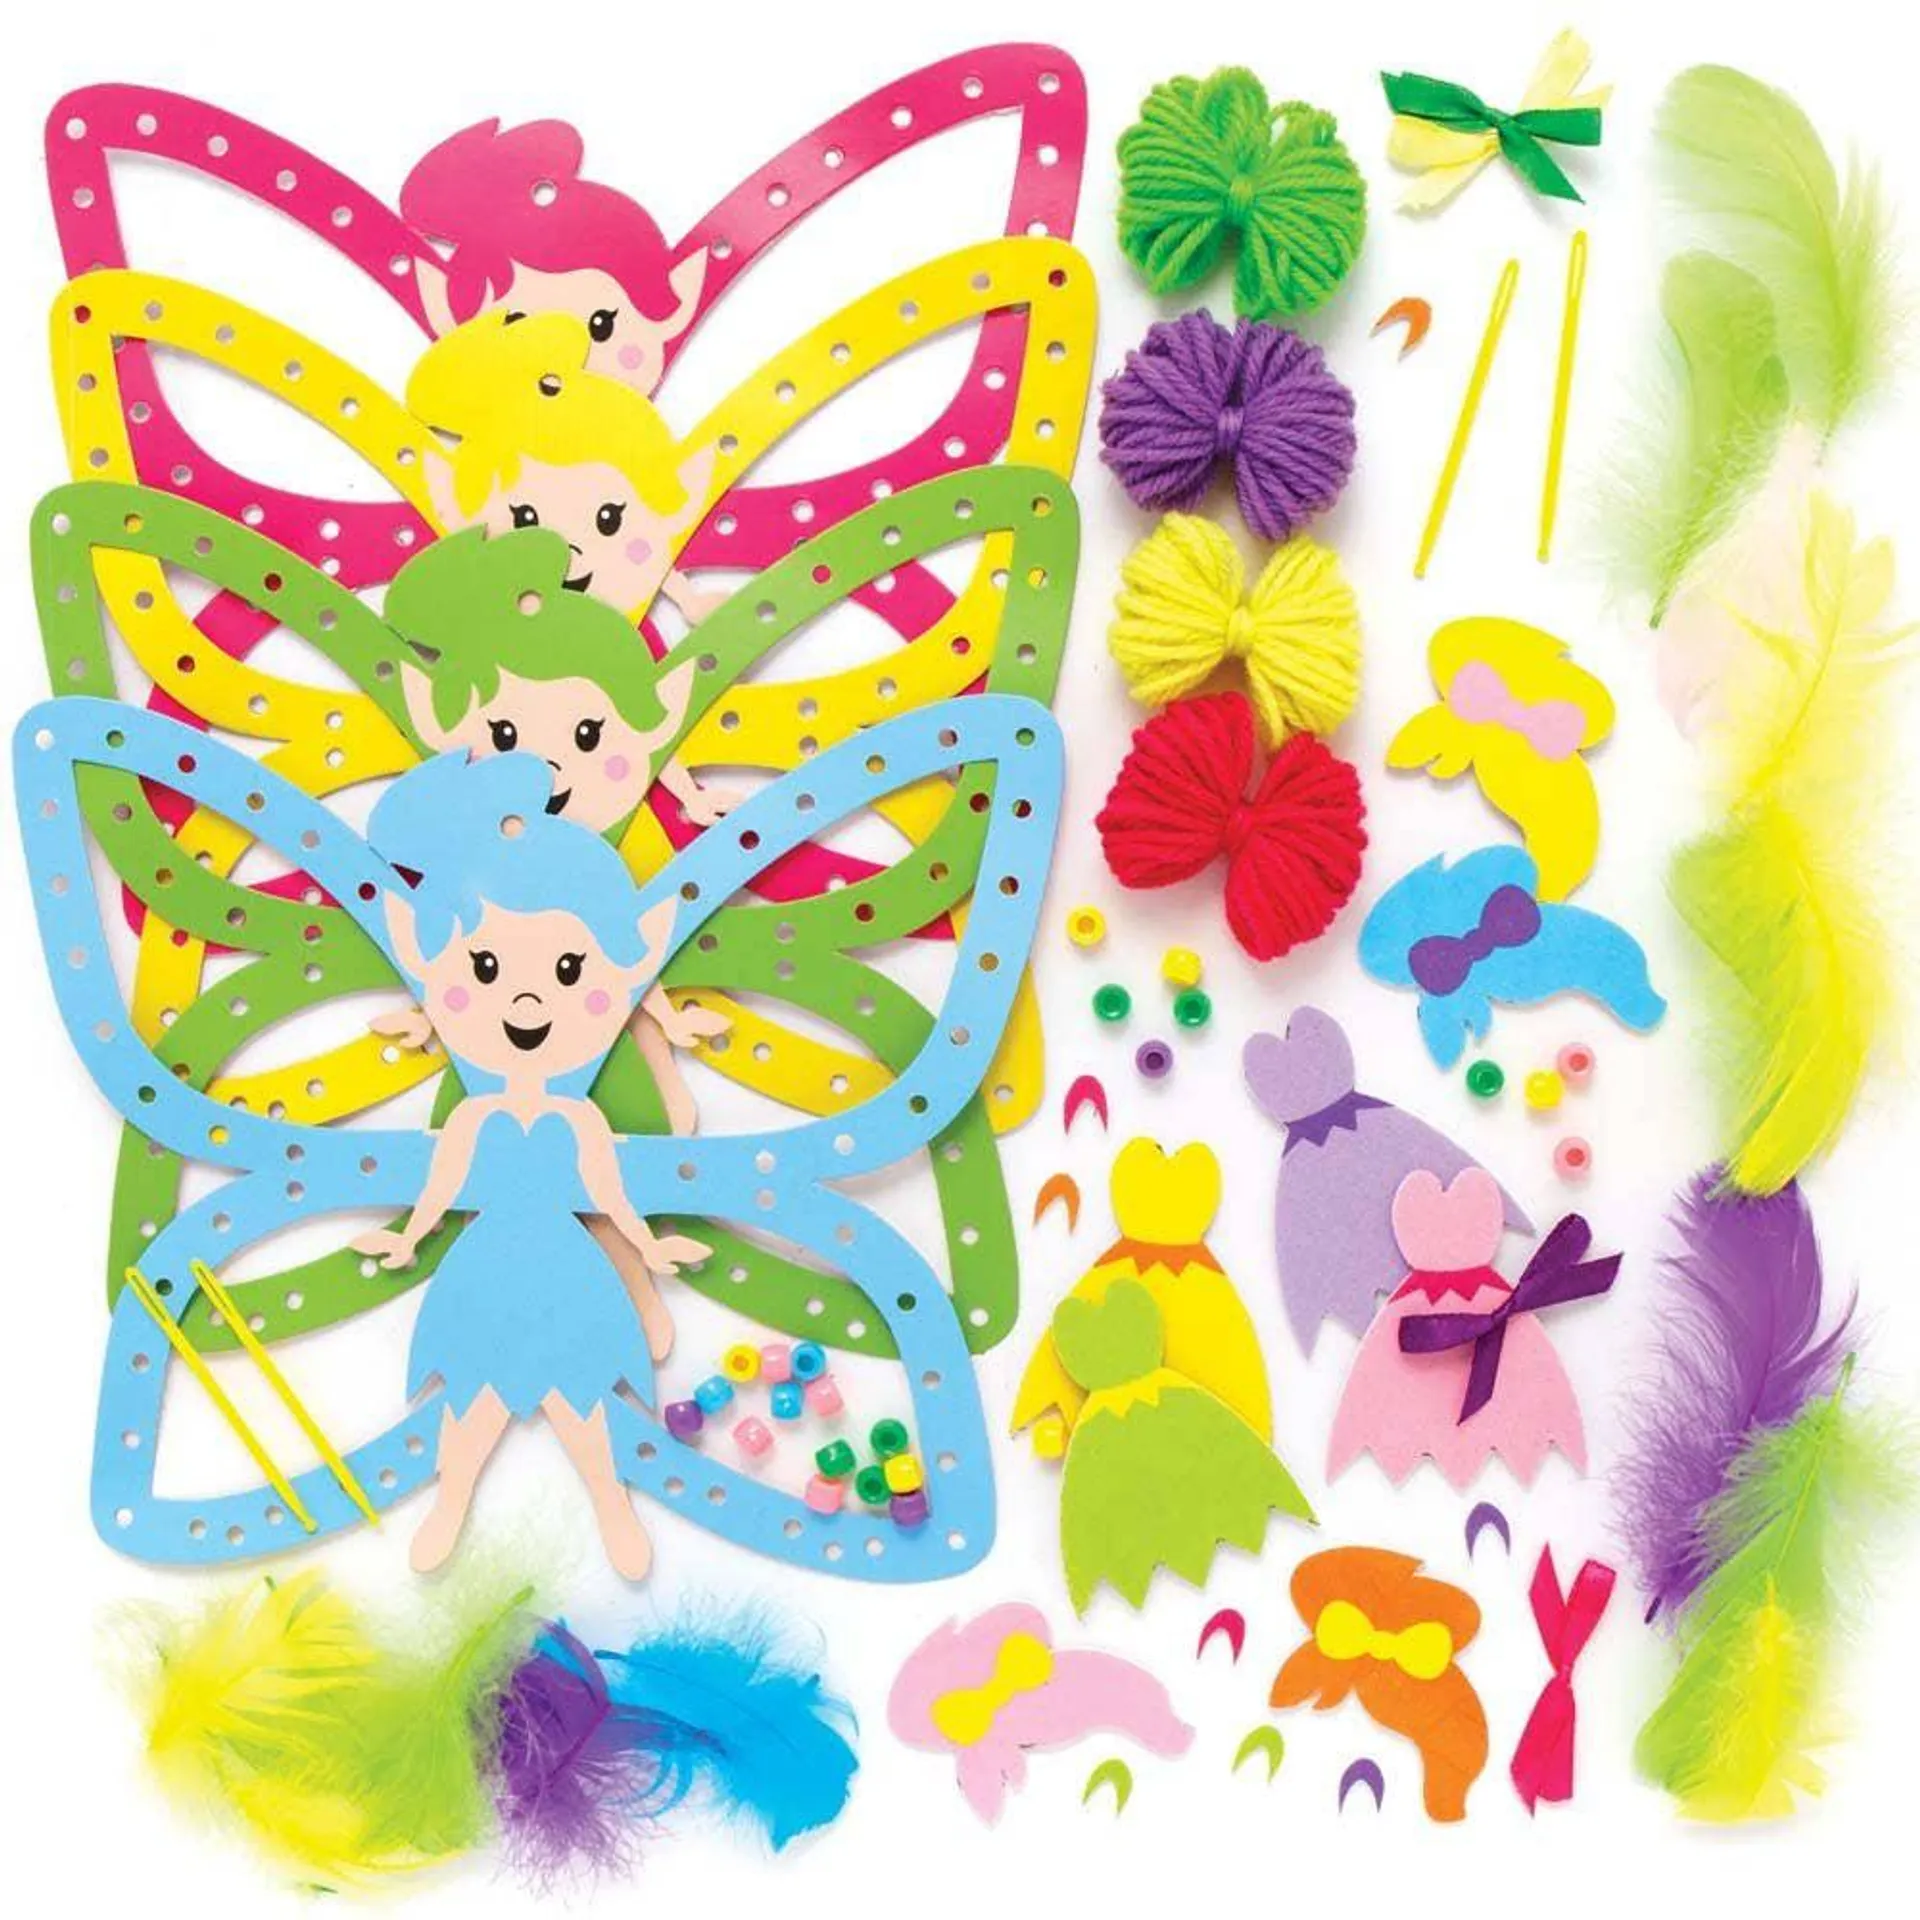 Fairy Dreamcatcher Kits